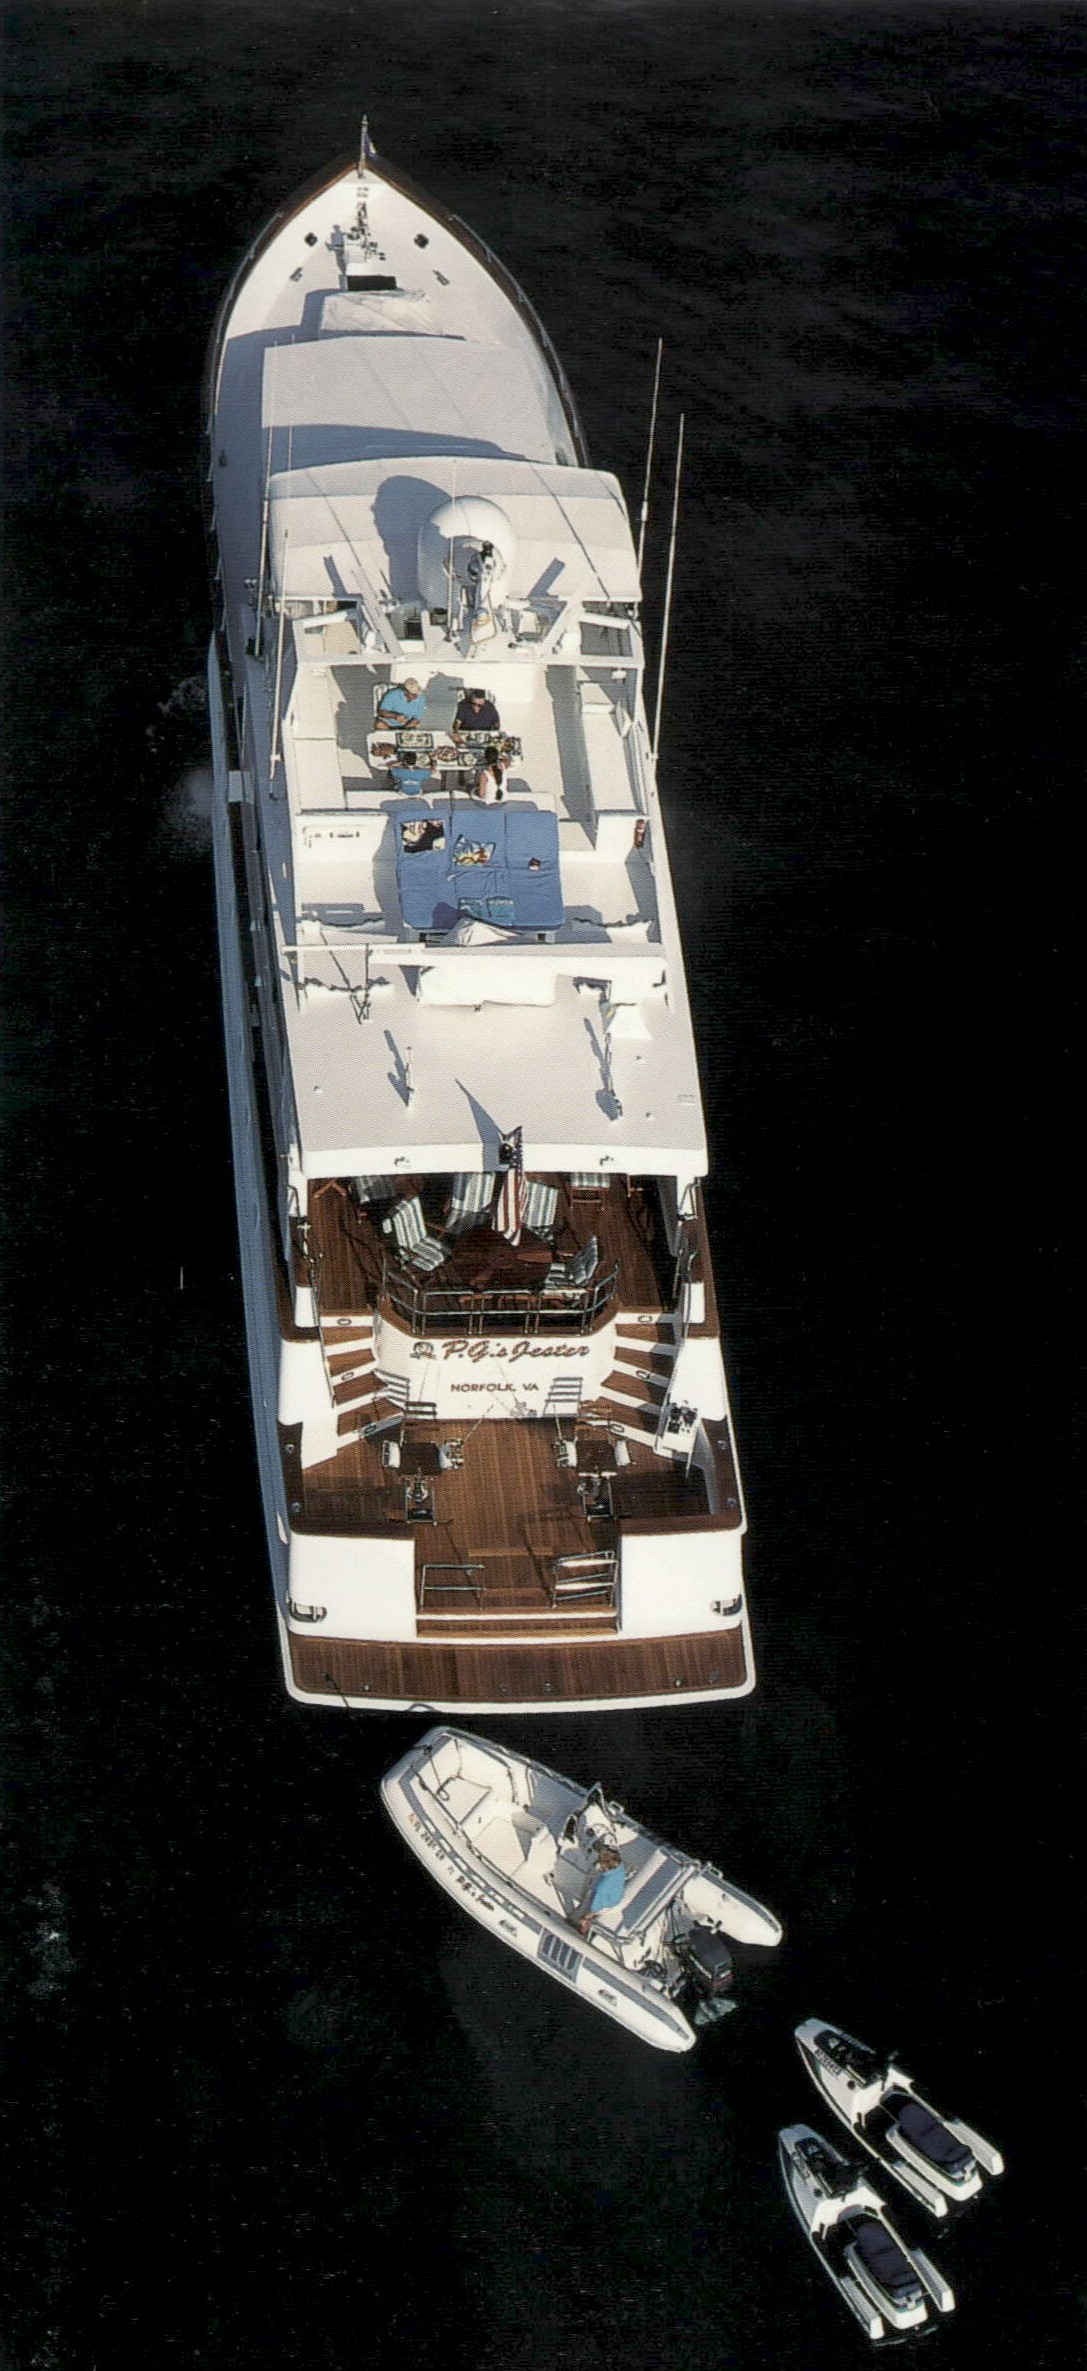 The 32m Yacht SUMMER SPLENDOR